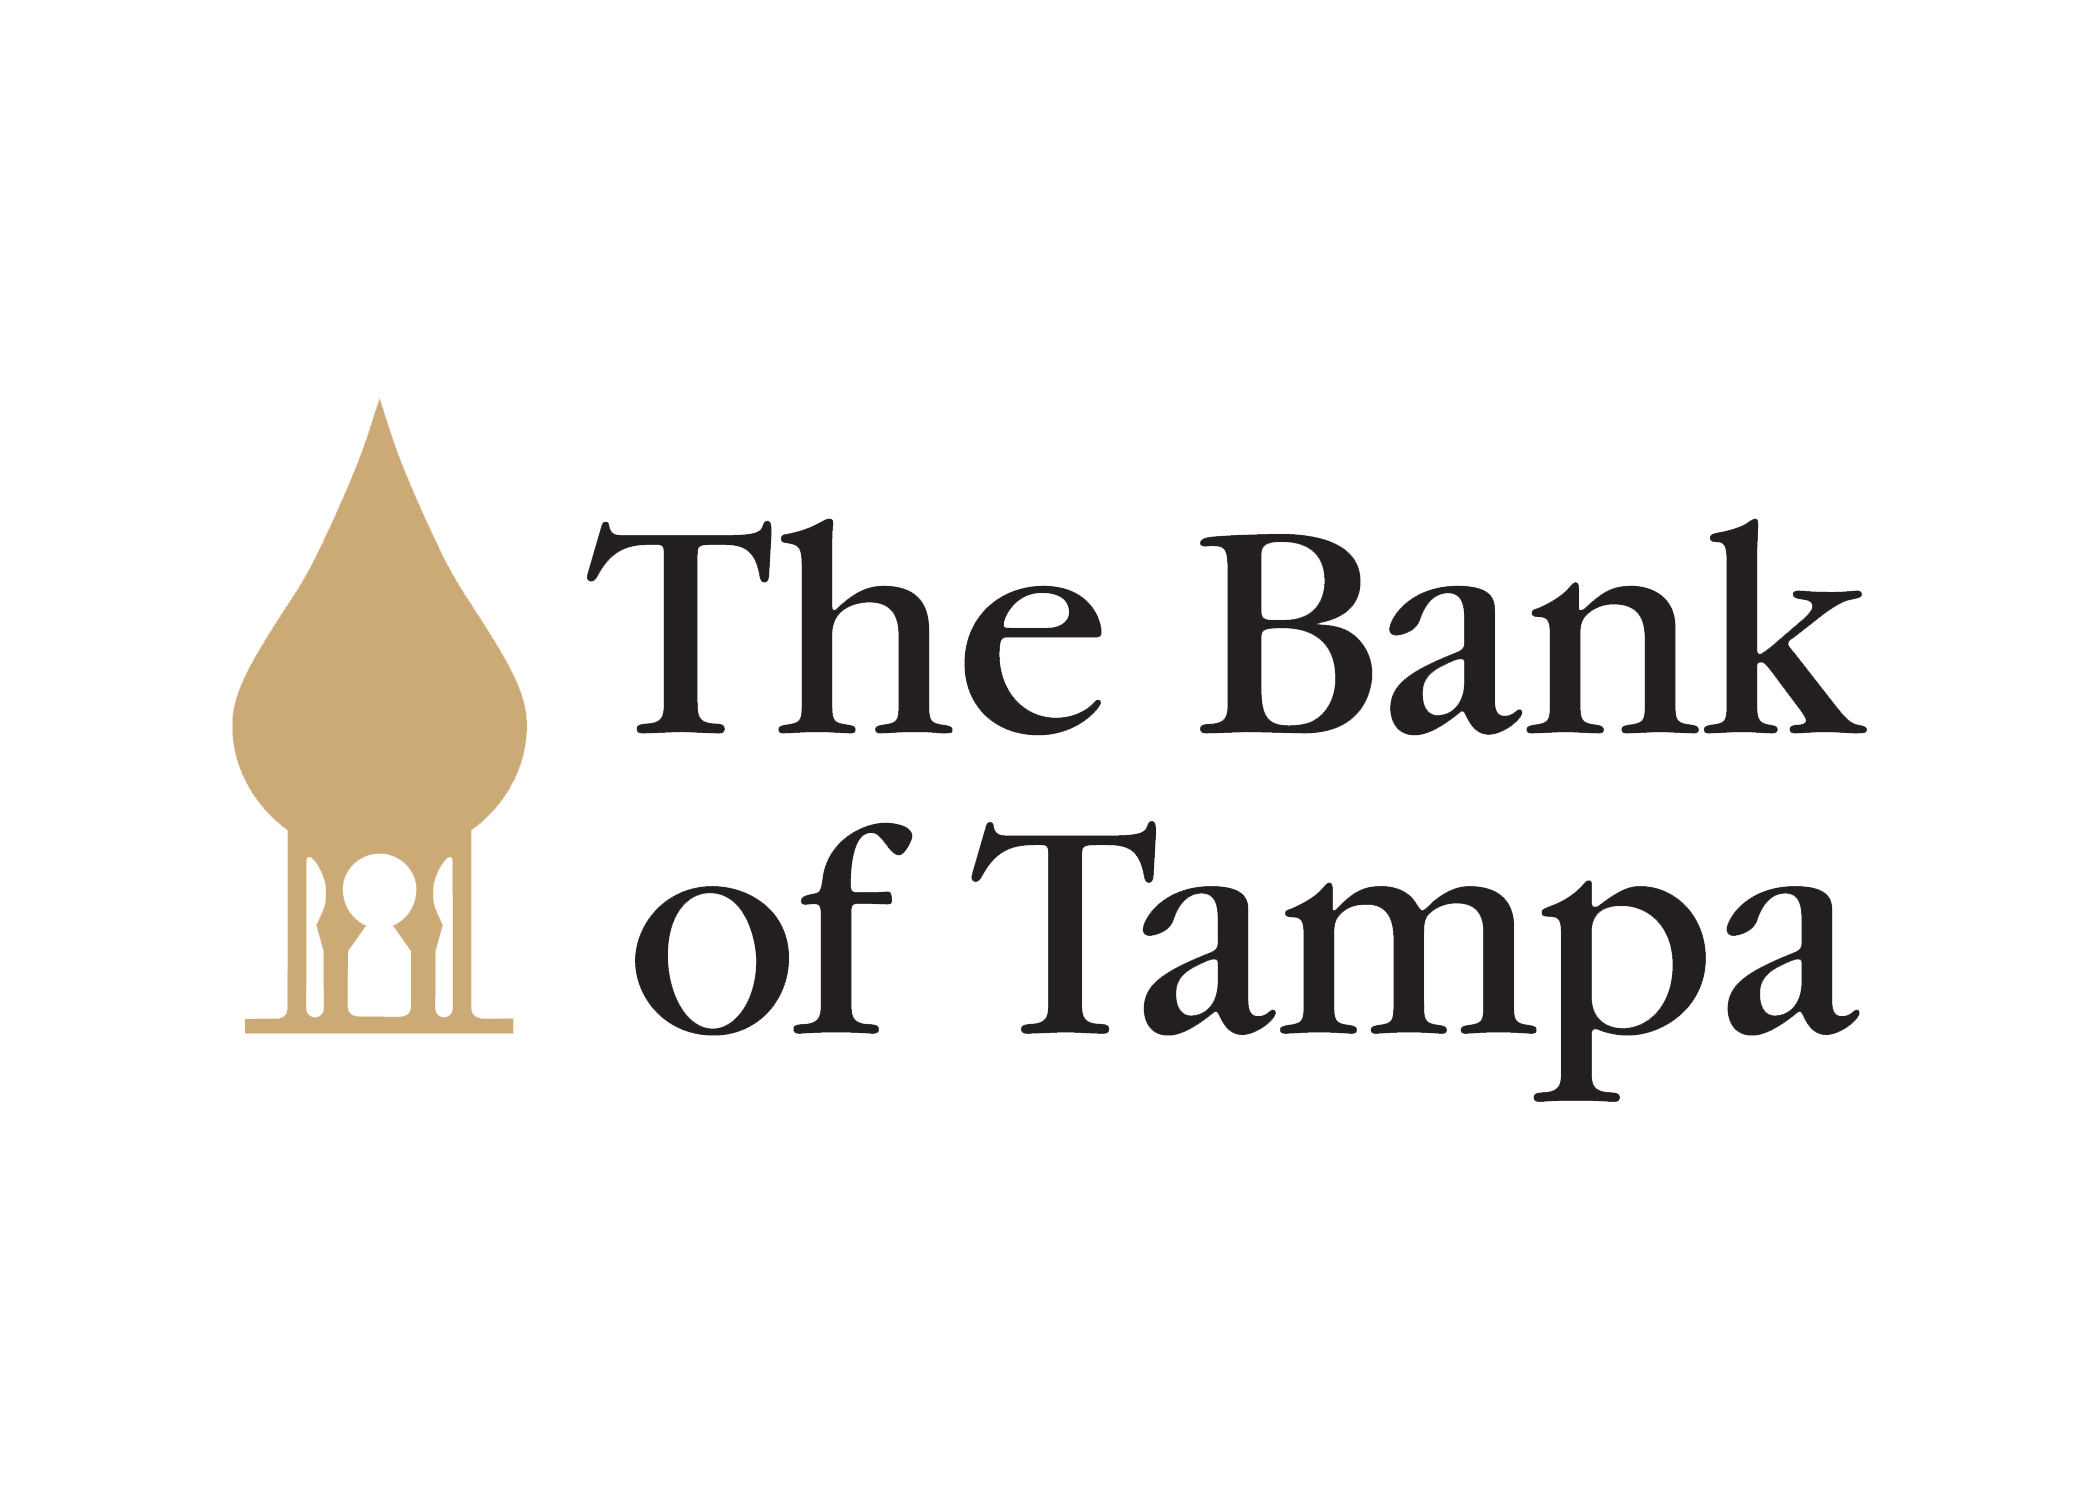 Bank of Tampa